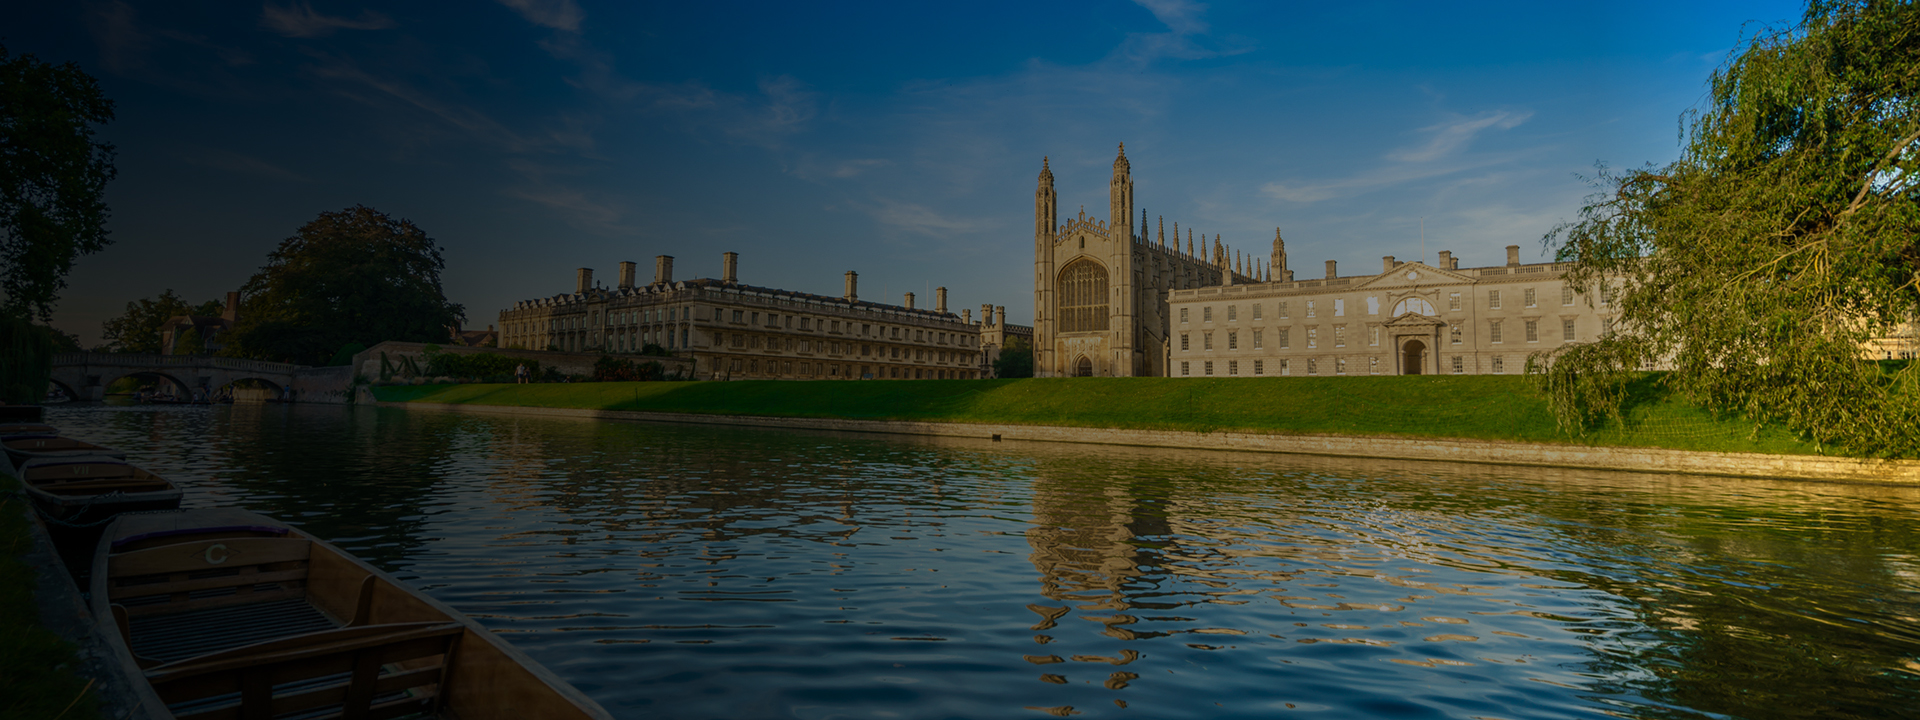 image of University of Cambridge campus